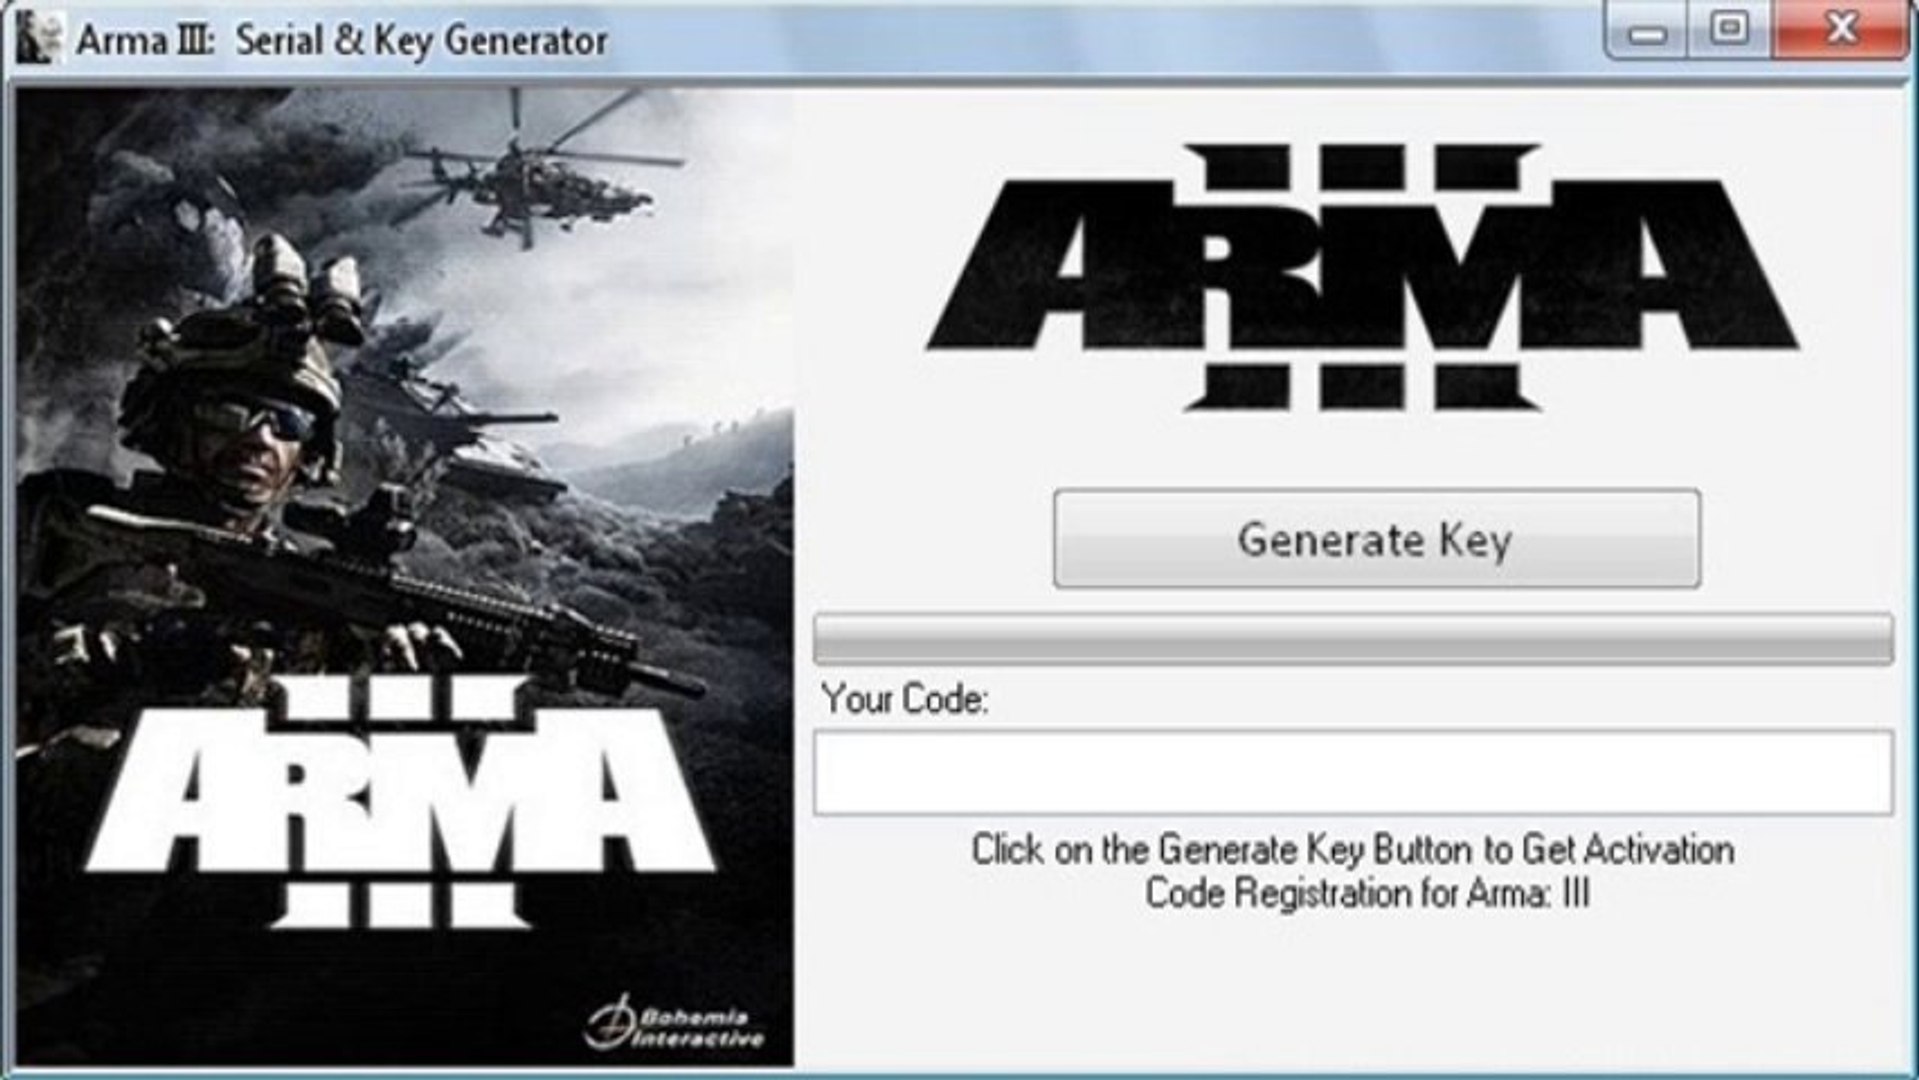 Arma III CD Keys Free - Arma 3 CD Key Generator - video Dailymotion